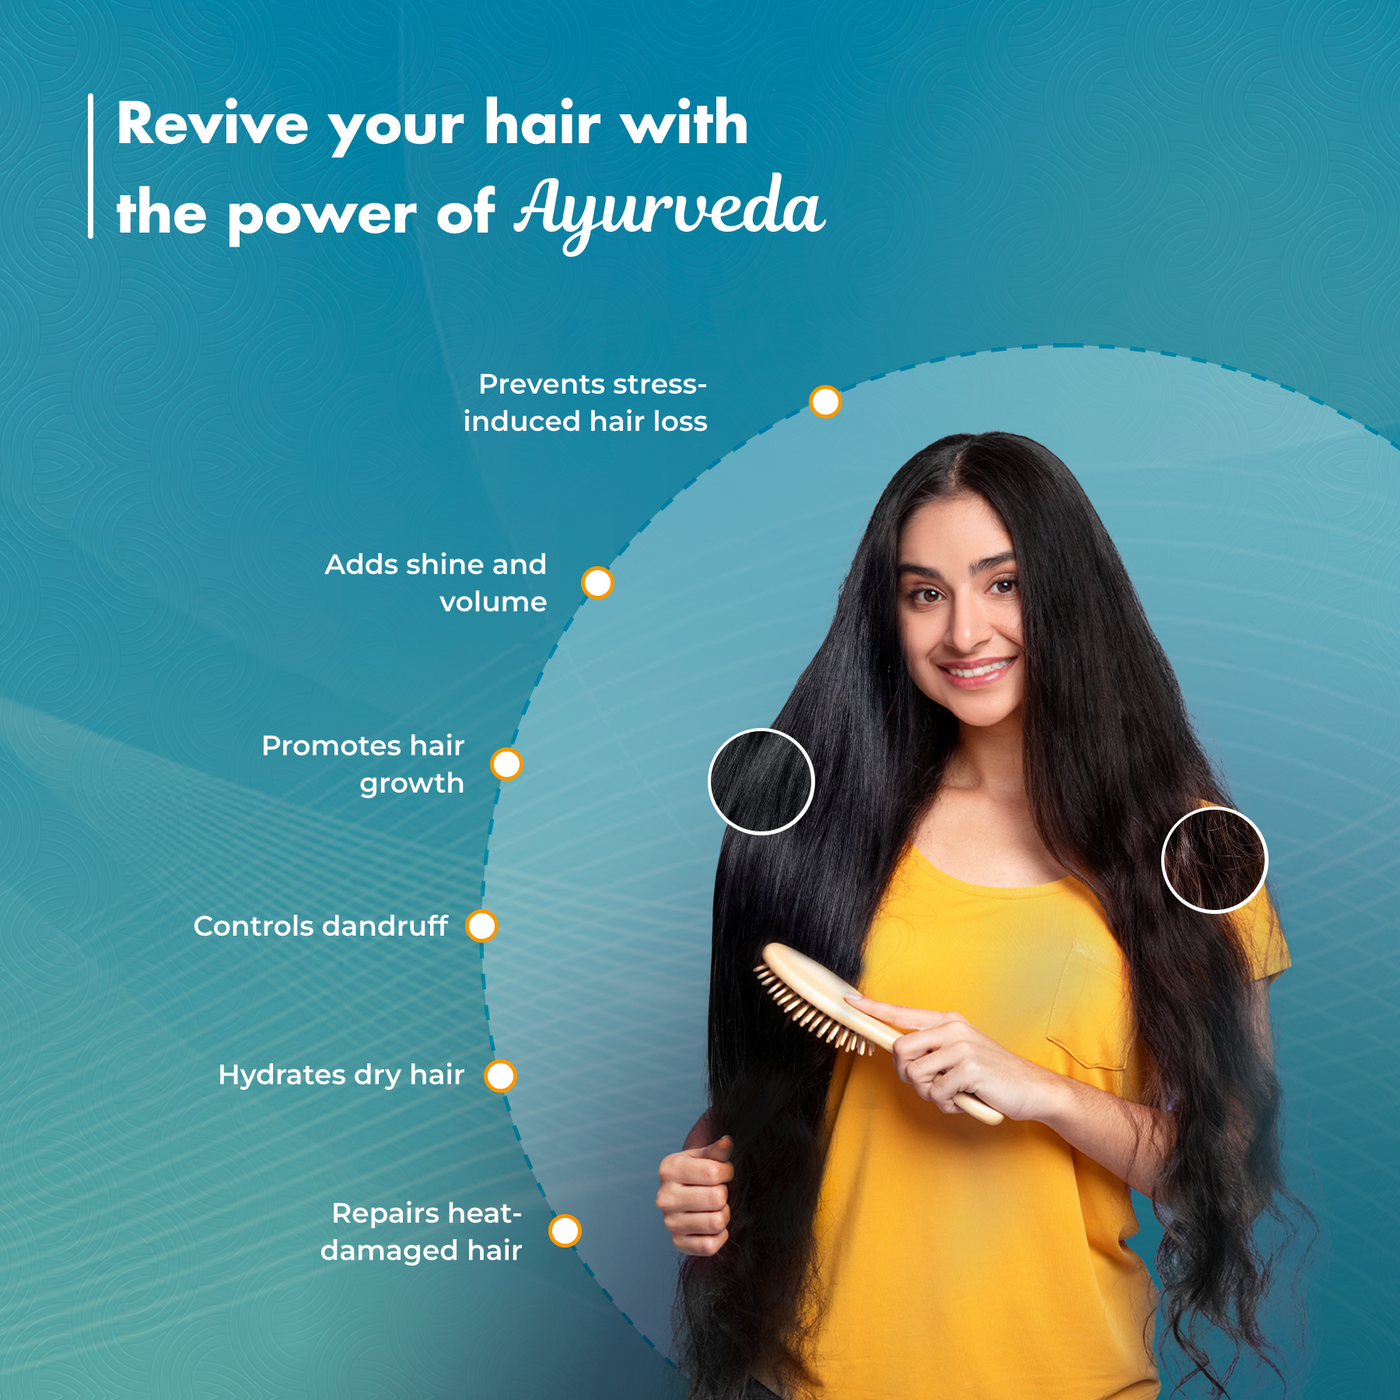 Hair Oil (100 ml) - Ayurvedic oil that treats major hair issues including hair fall, premature greying, dandruff etc